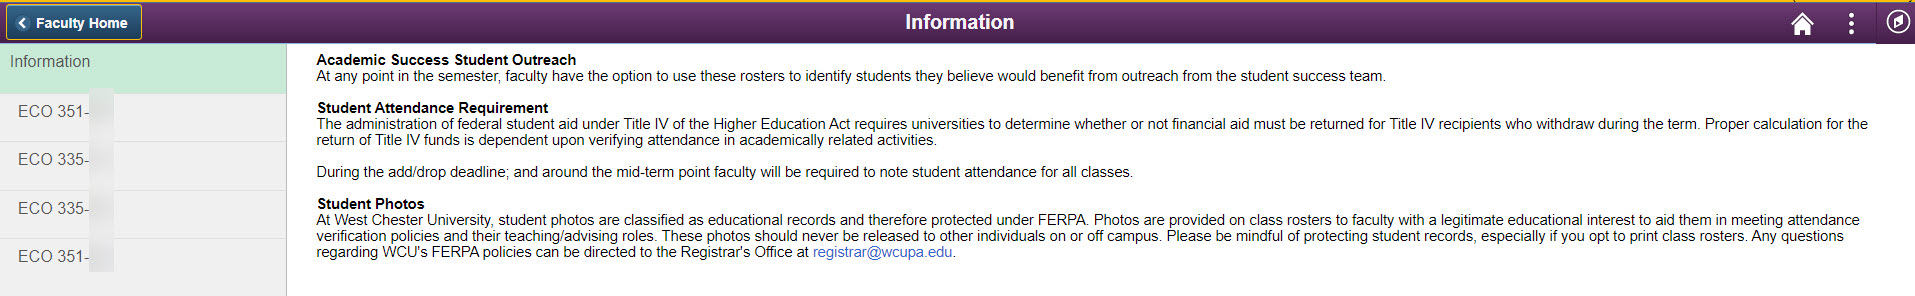 Screenshot for Student Alert & Attendance information including academic success student outreach, student attendance requirements, and student photos.